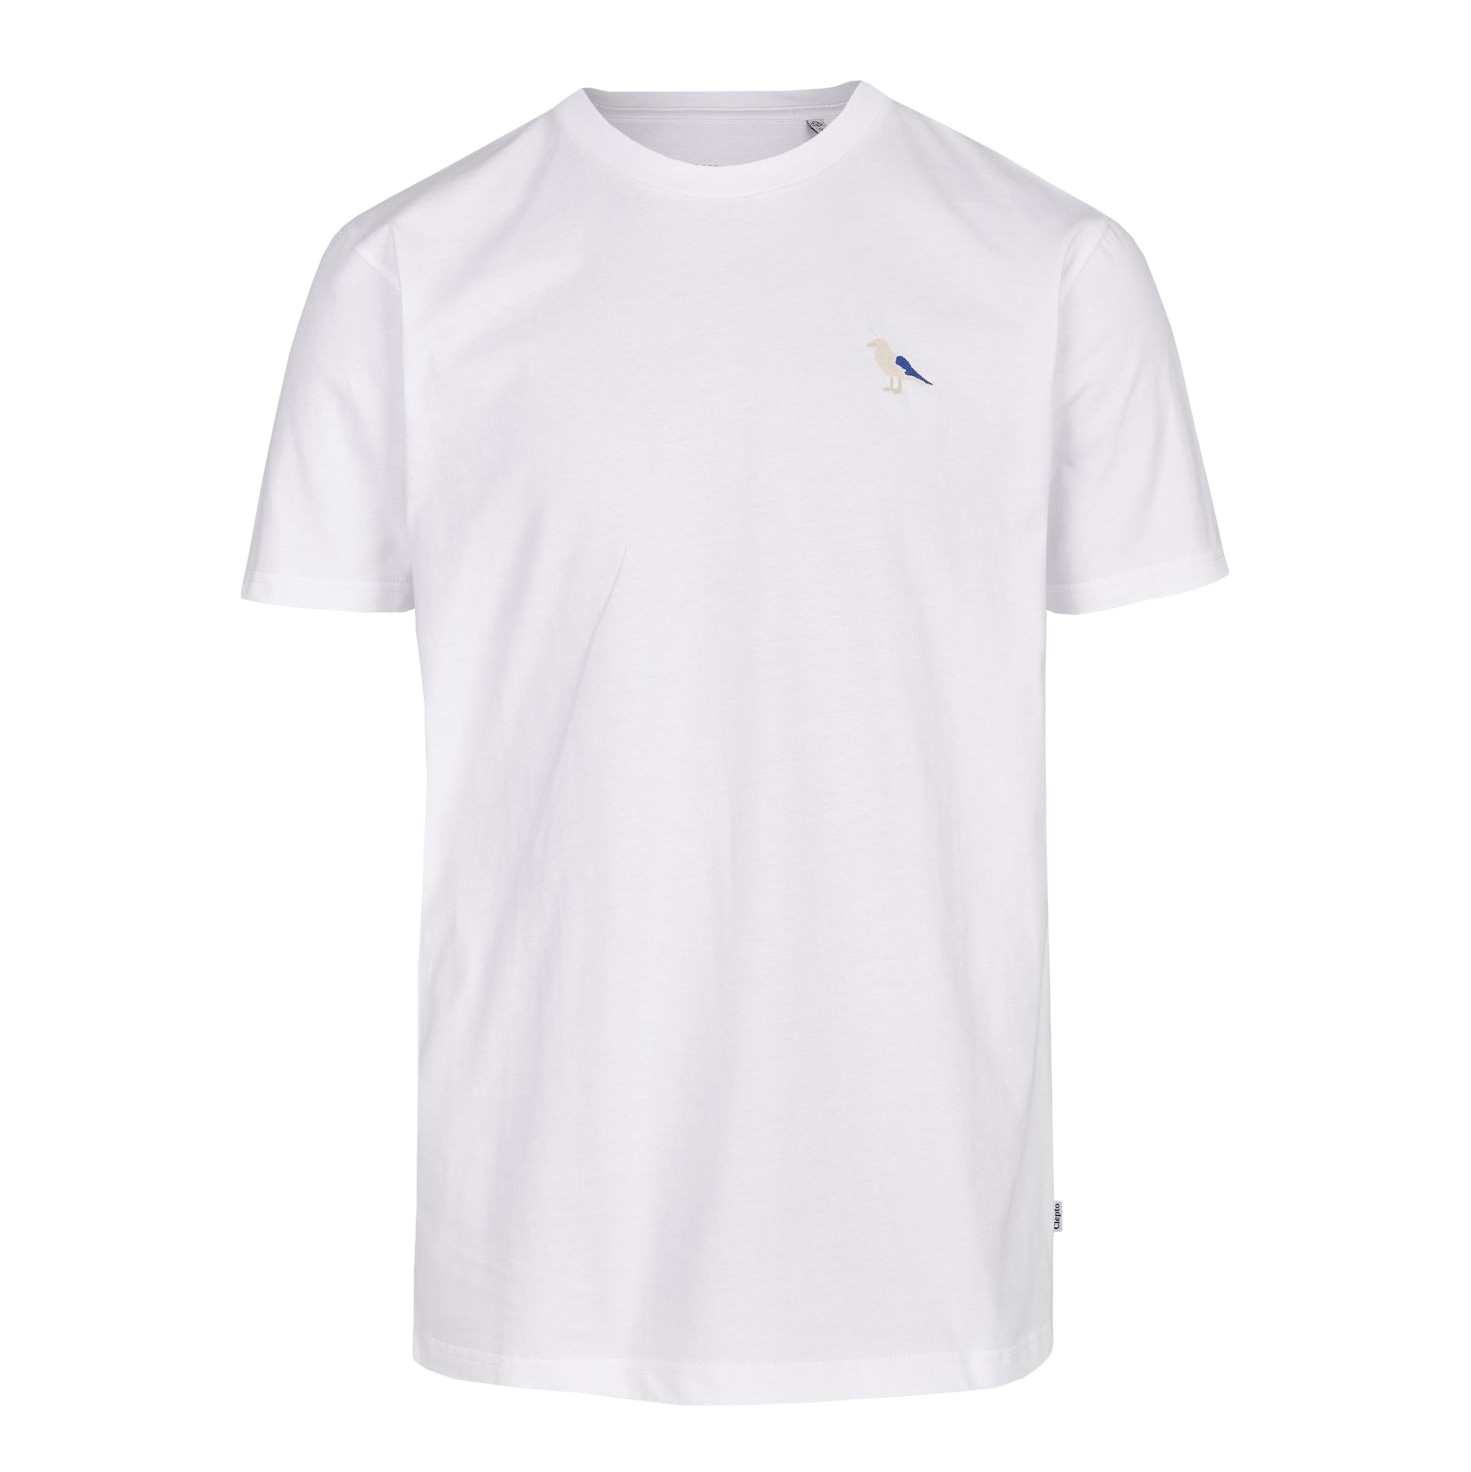 Cleptomanicx T-Shirt Embro Gull (white)